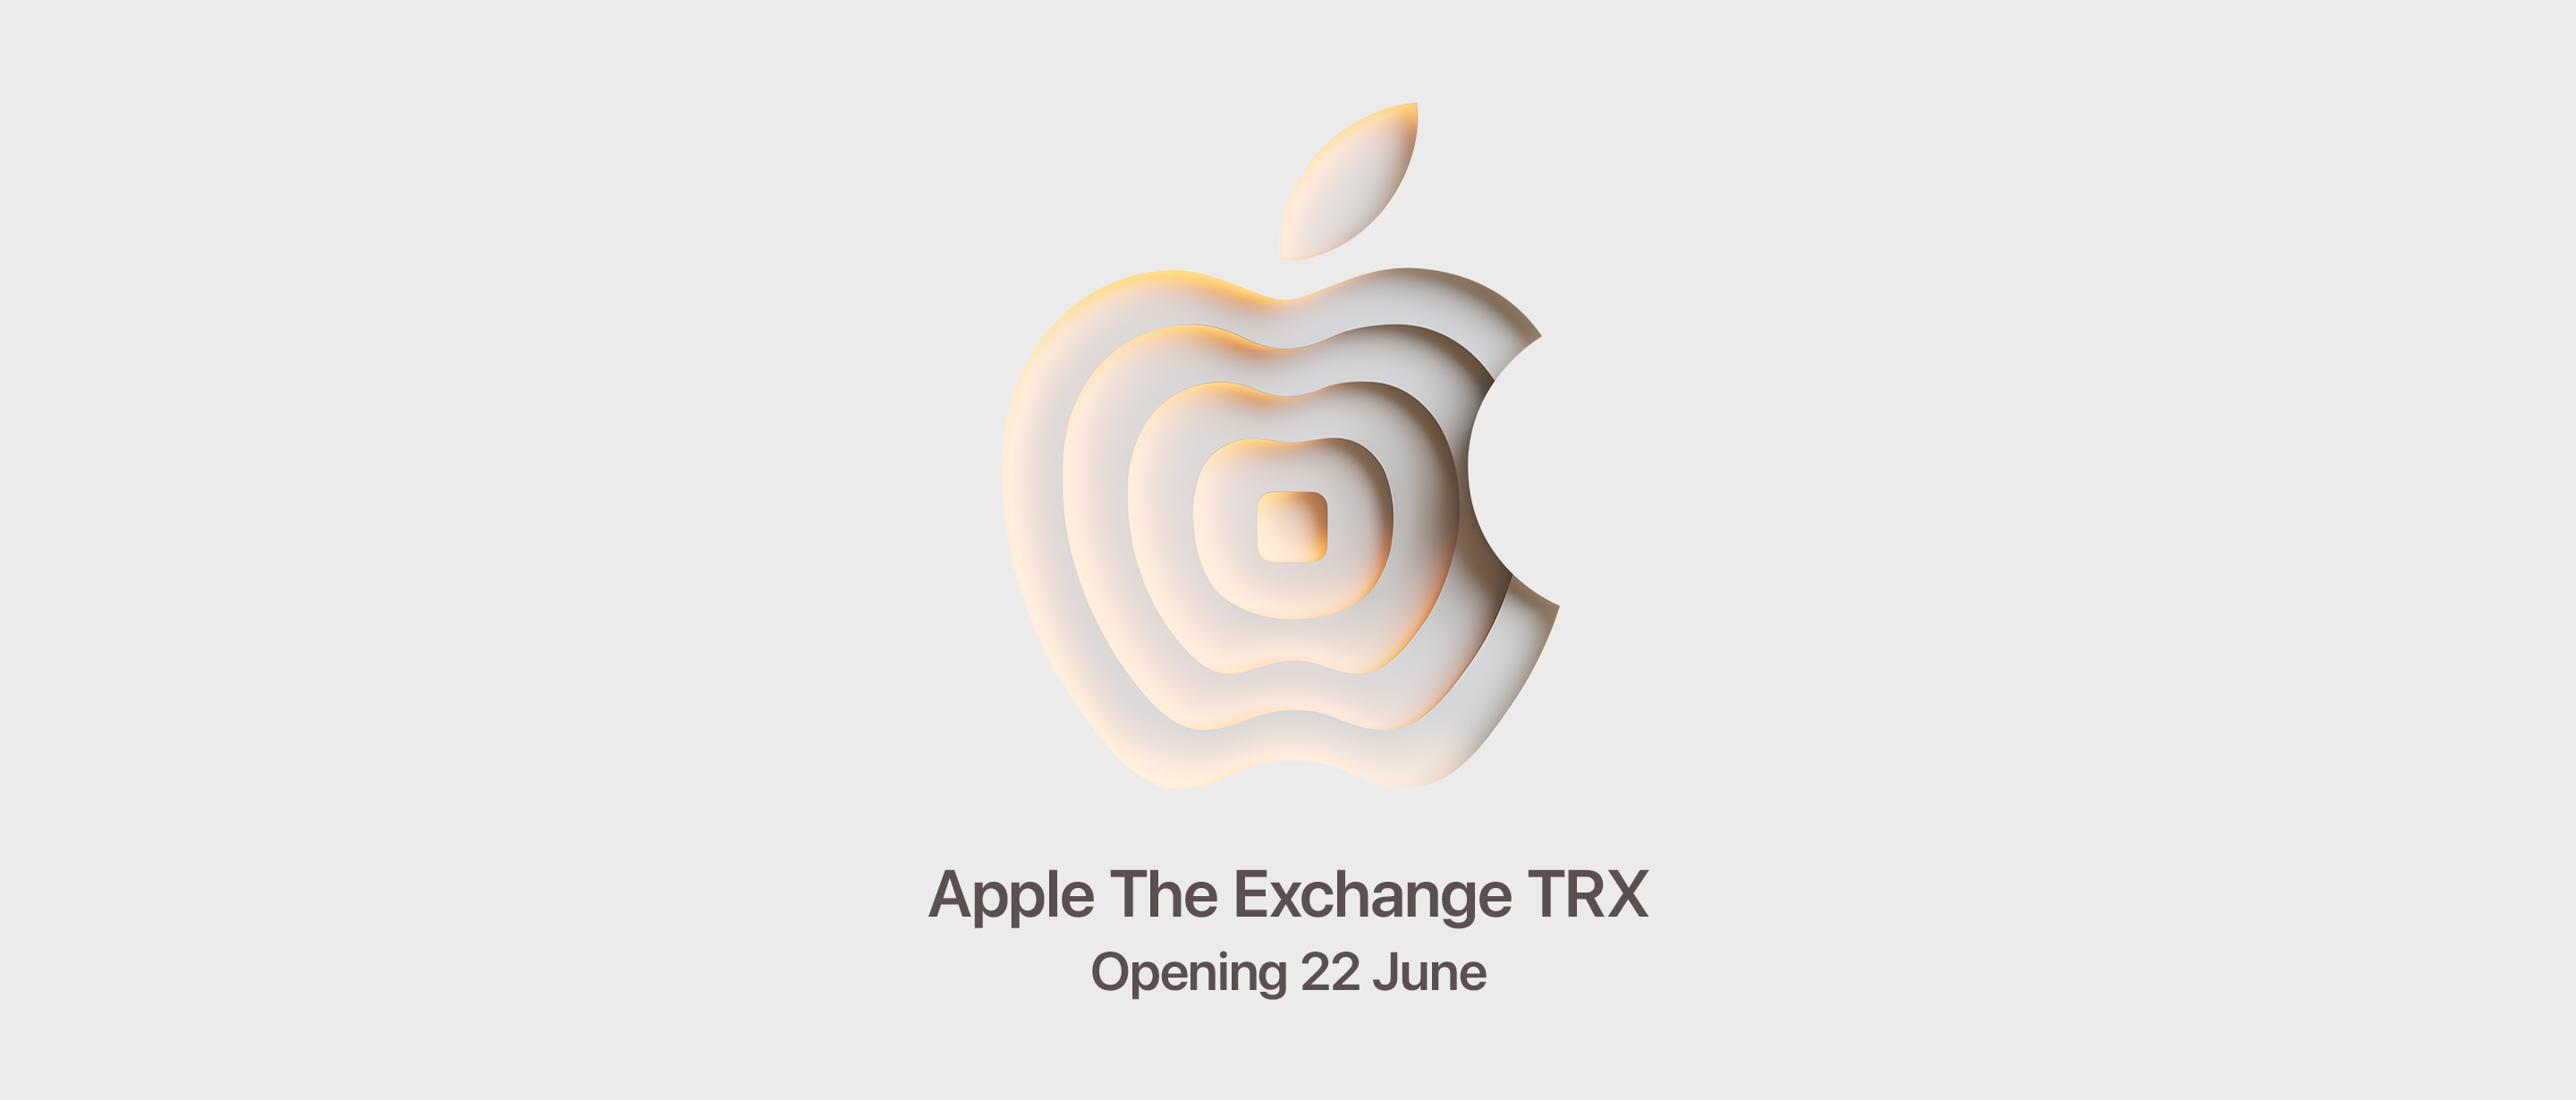 MY_Apple_The_Exchange_TRX_Static_Banner_Announce_Landlord_Website_1440x615_2x_LR.jpg